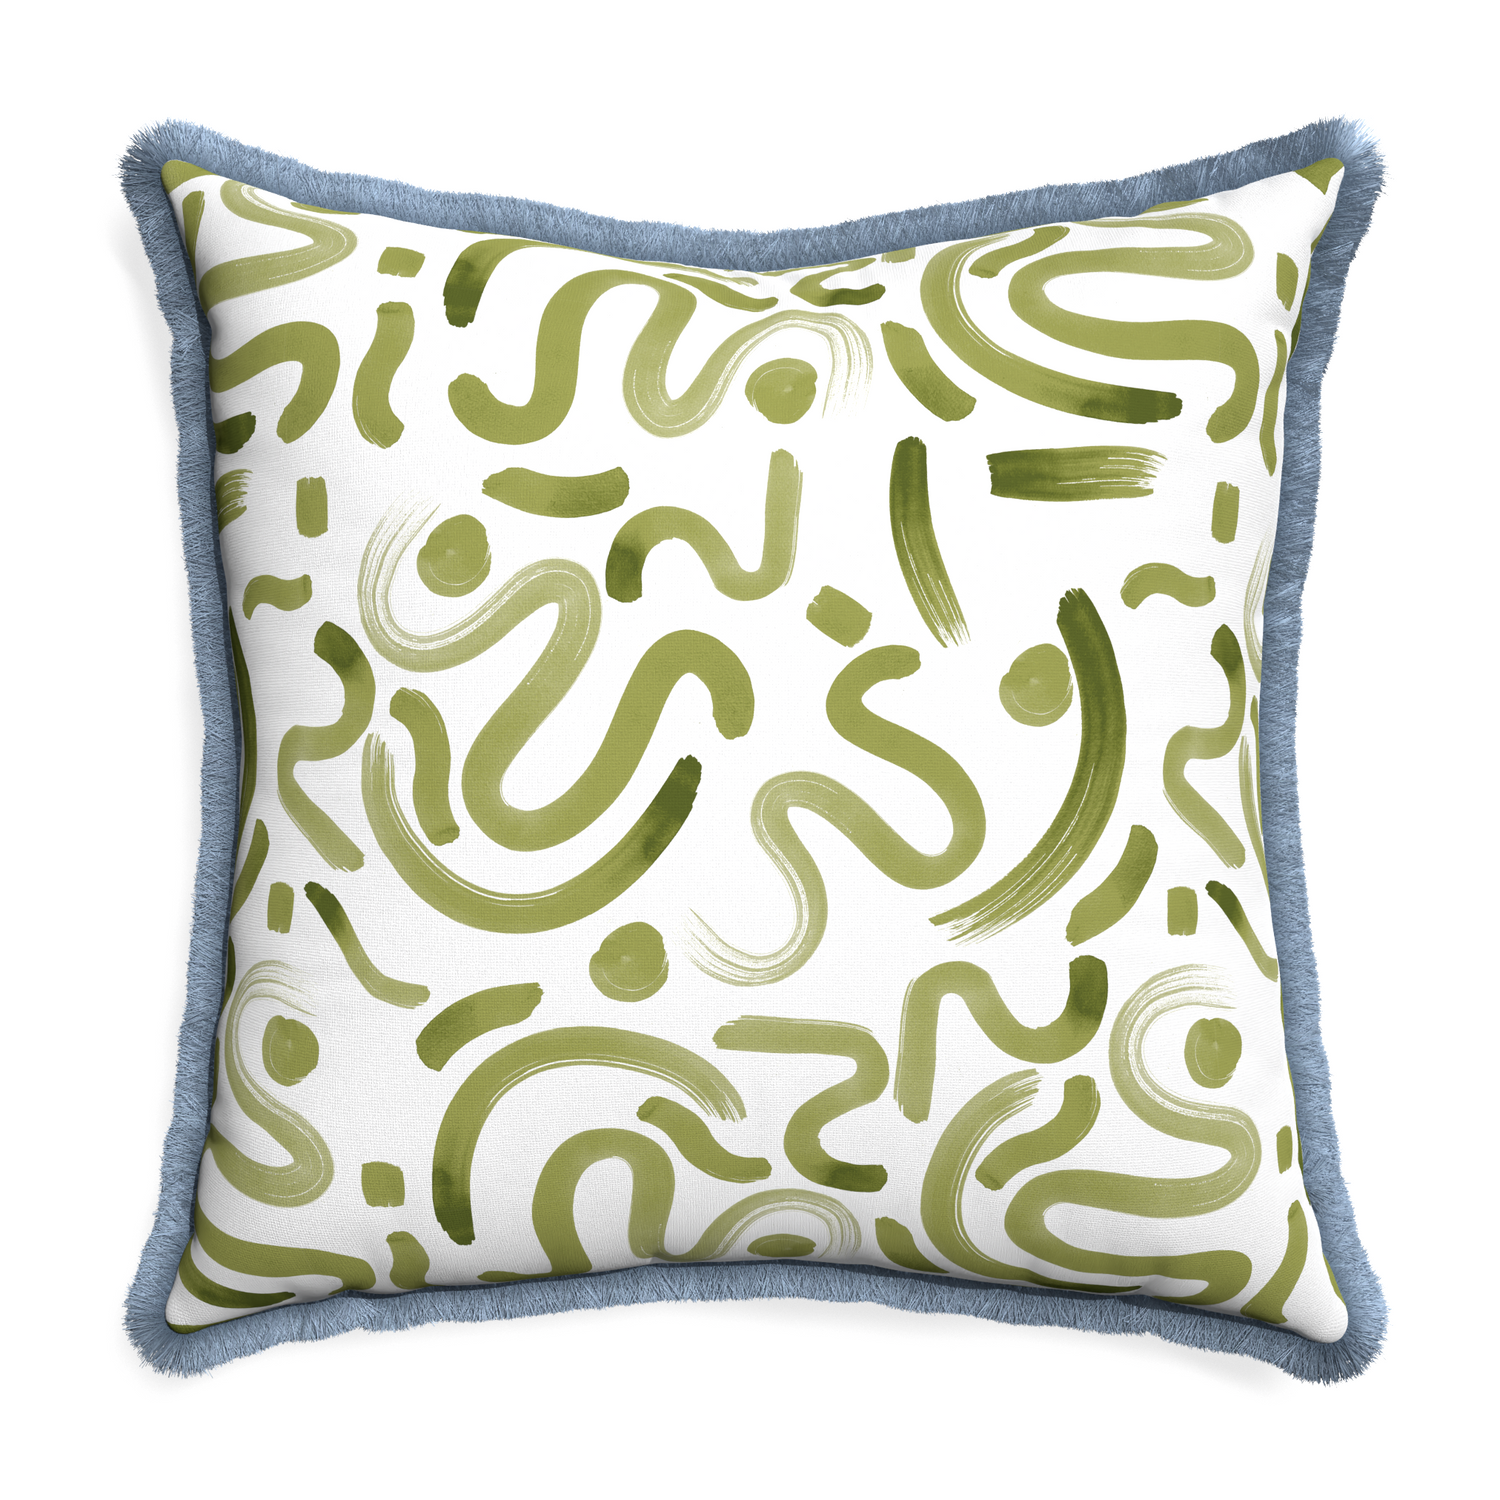 Euro-sham hockney moss custom pillow with sky fringe on white background